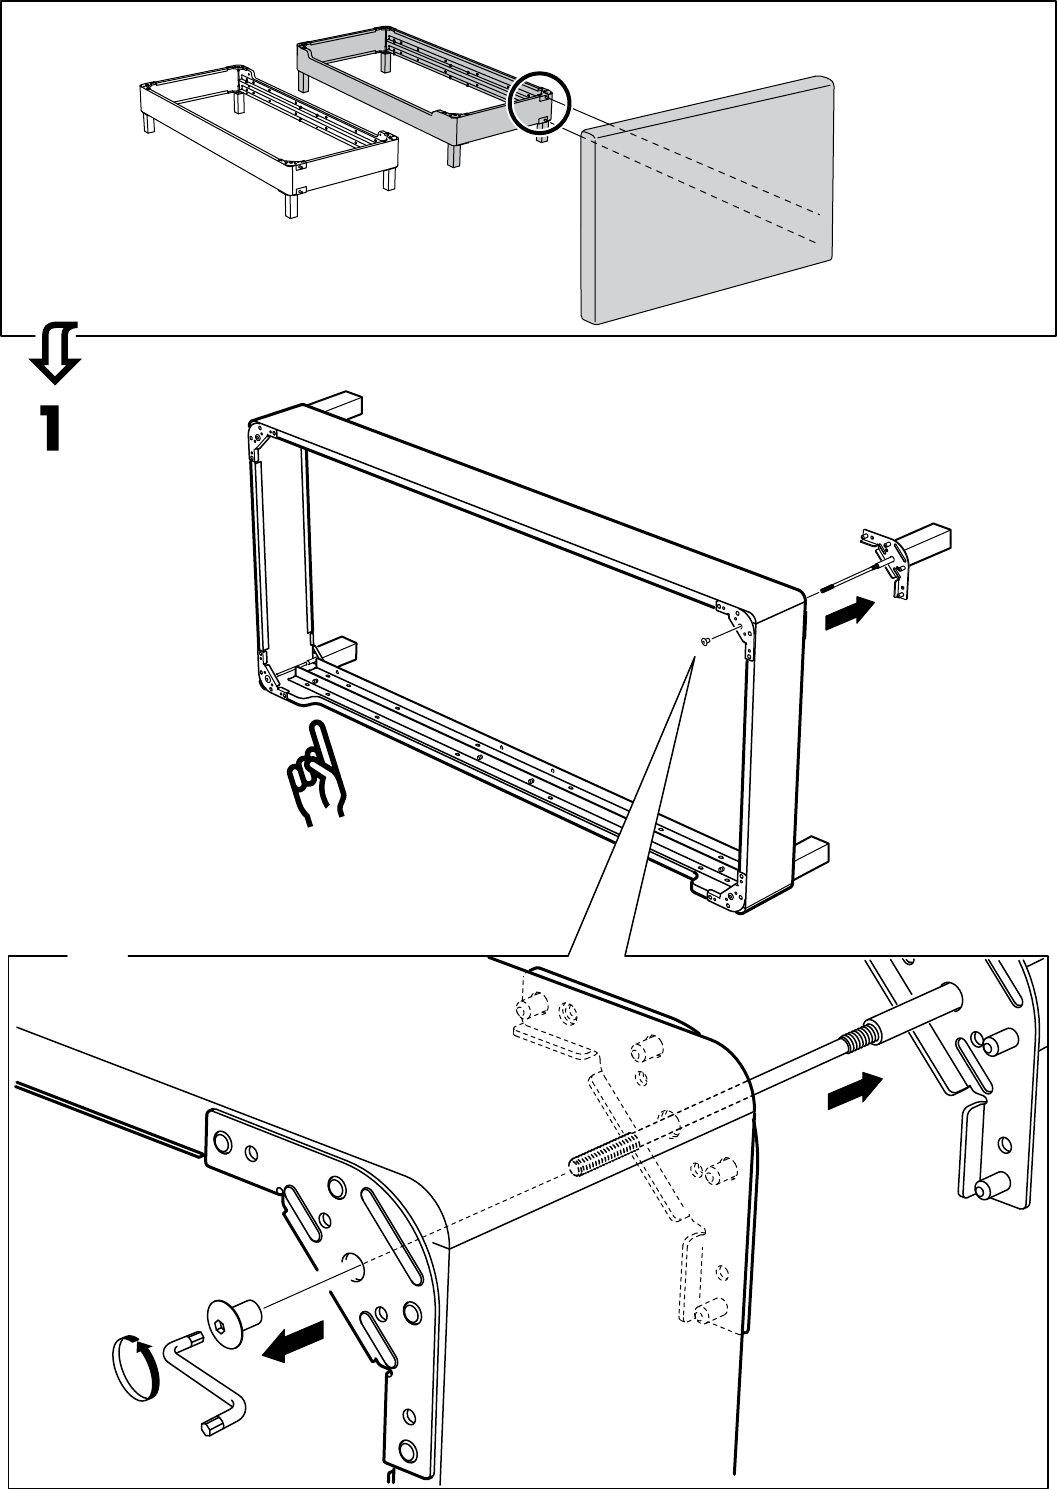 4 IKEA Screws Part # 114509 